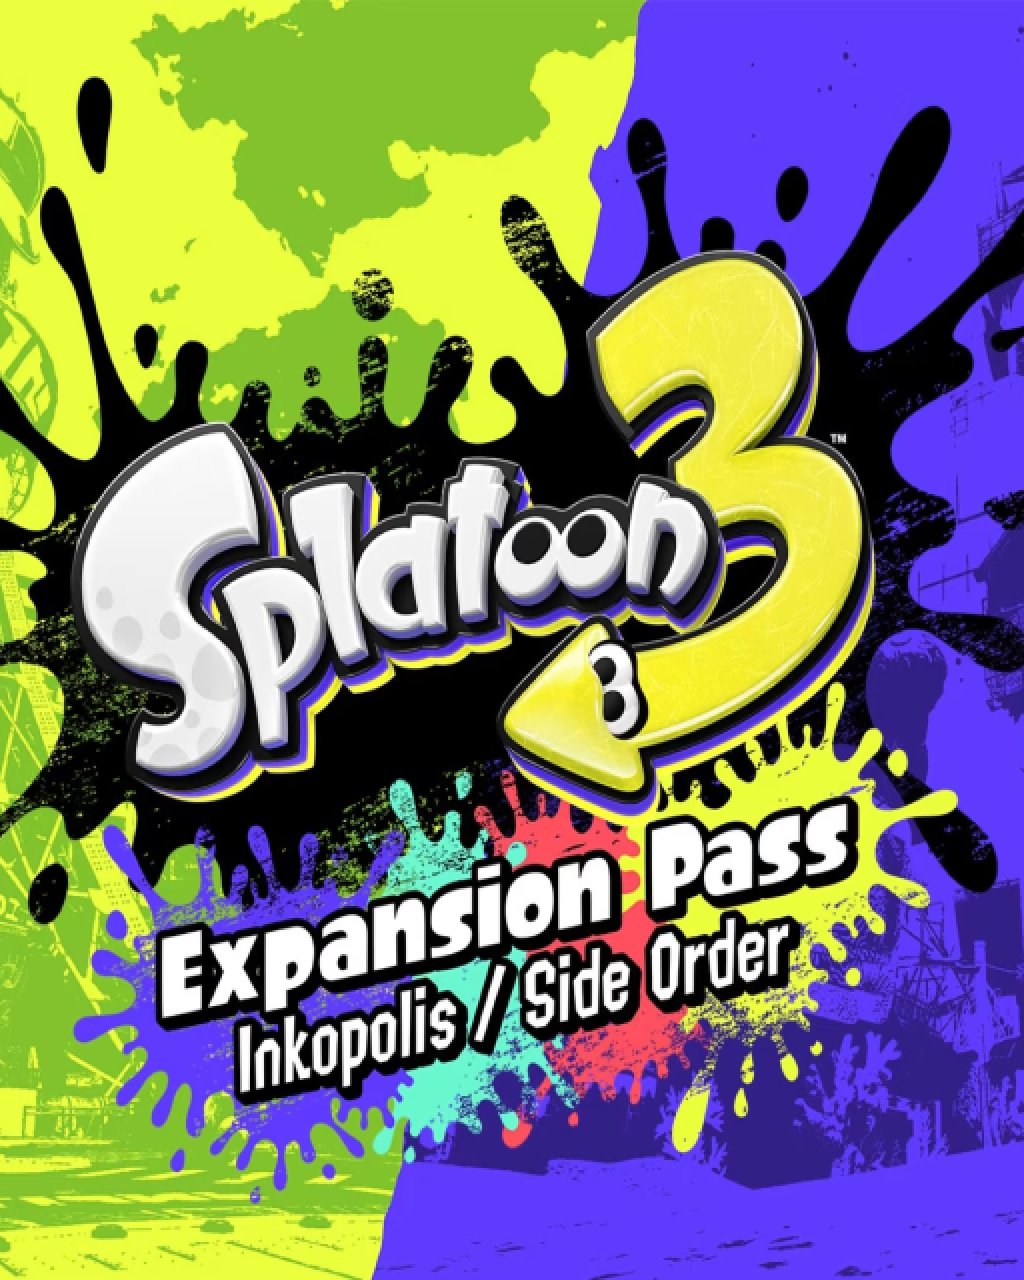 Splatoon 3 Expansion Pass